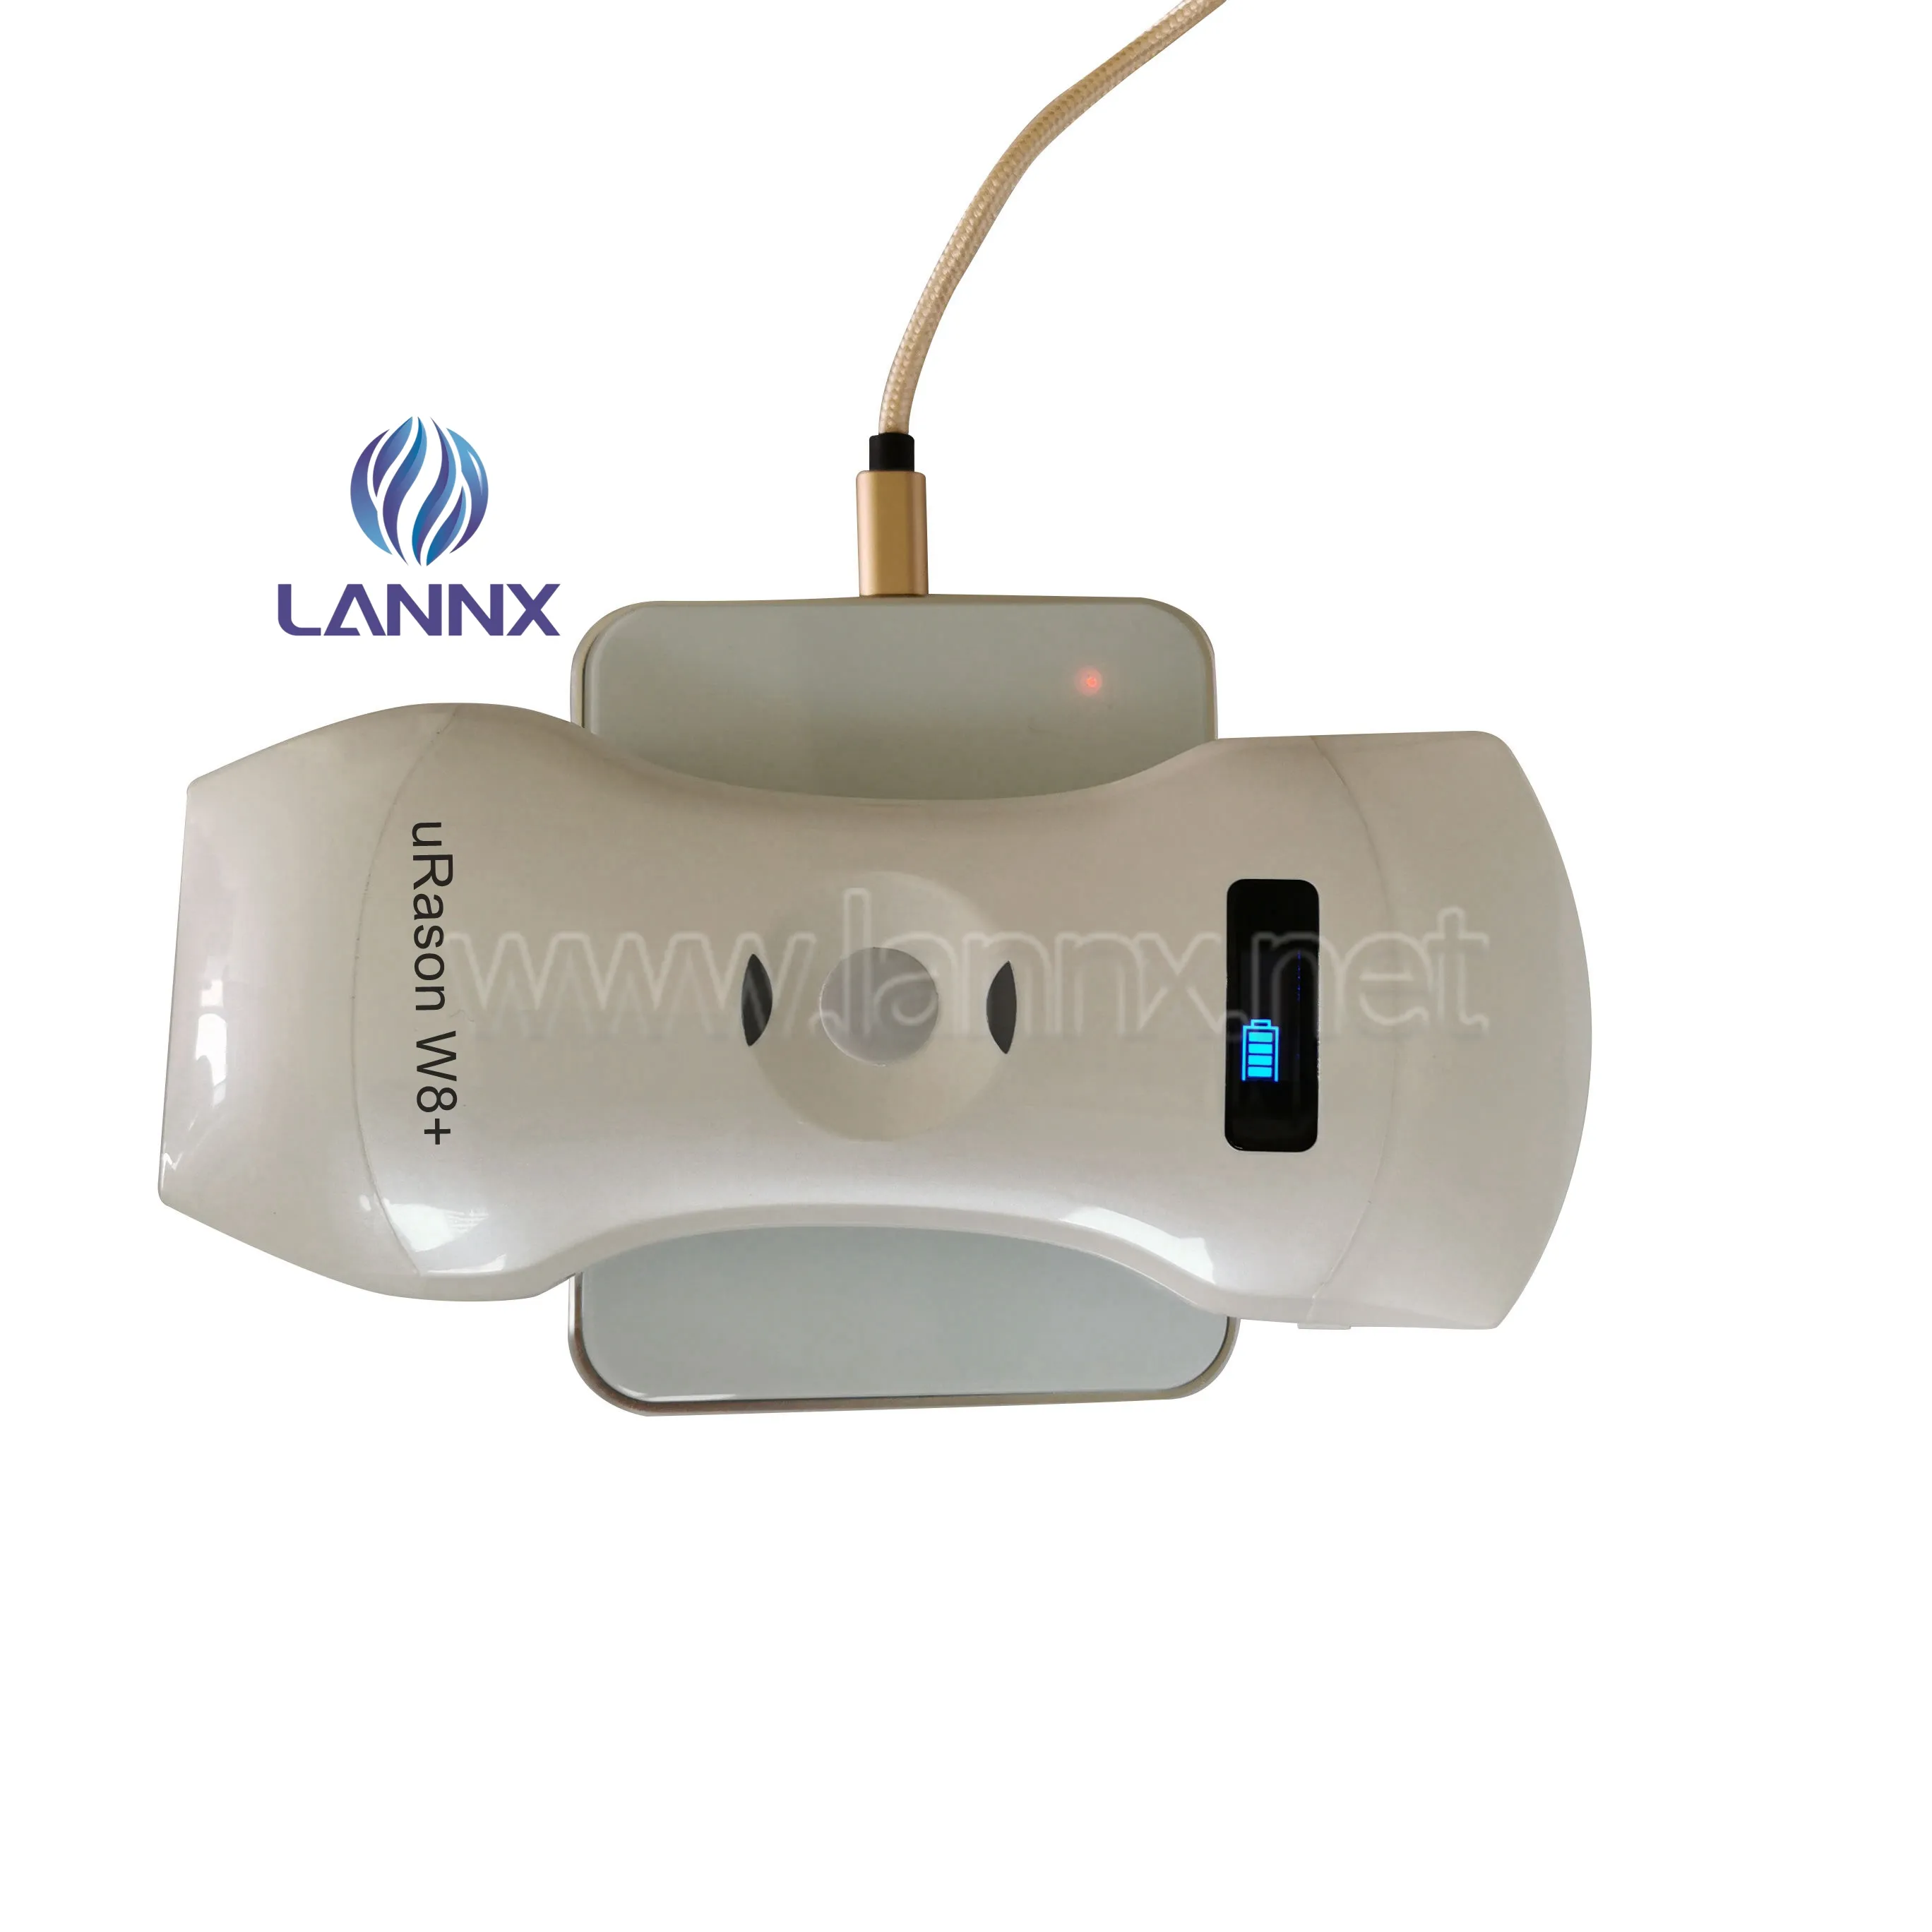 LANNX uRason W8 + 프로모션 무선 초음파 기계 볼록 선형 위상 프로브 휴대용 핸드 헬드 초음파 방수 프로브